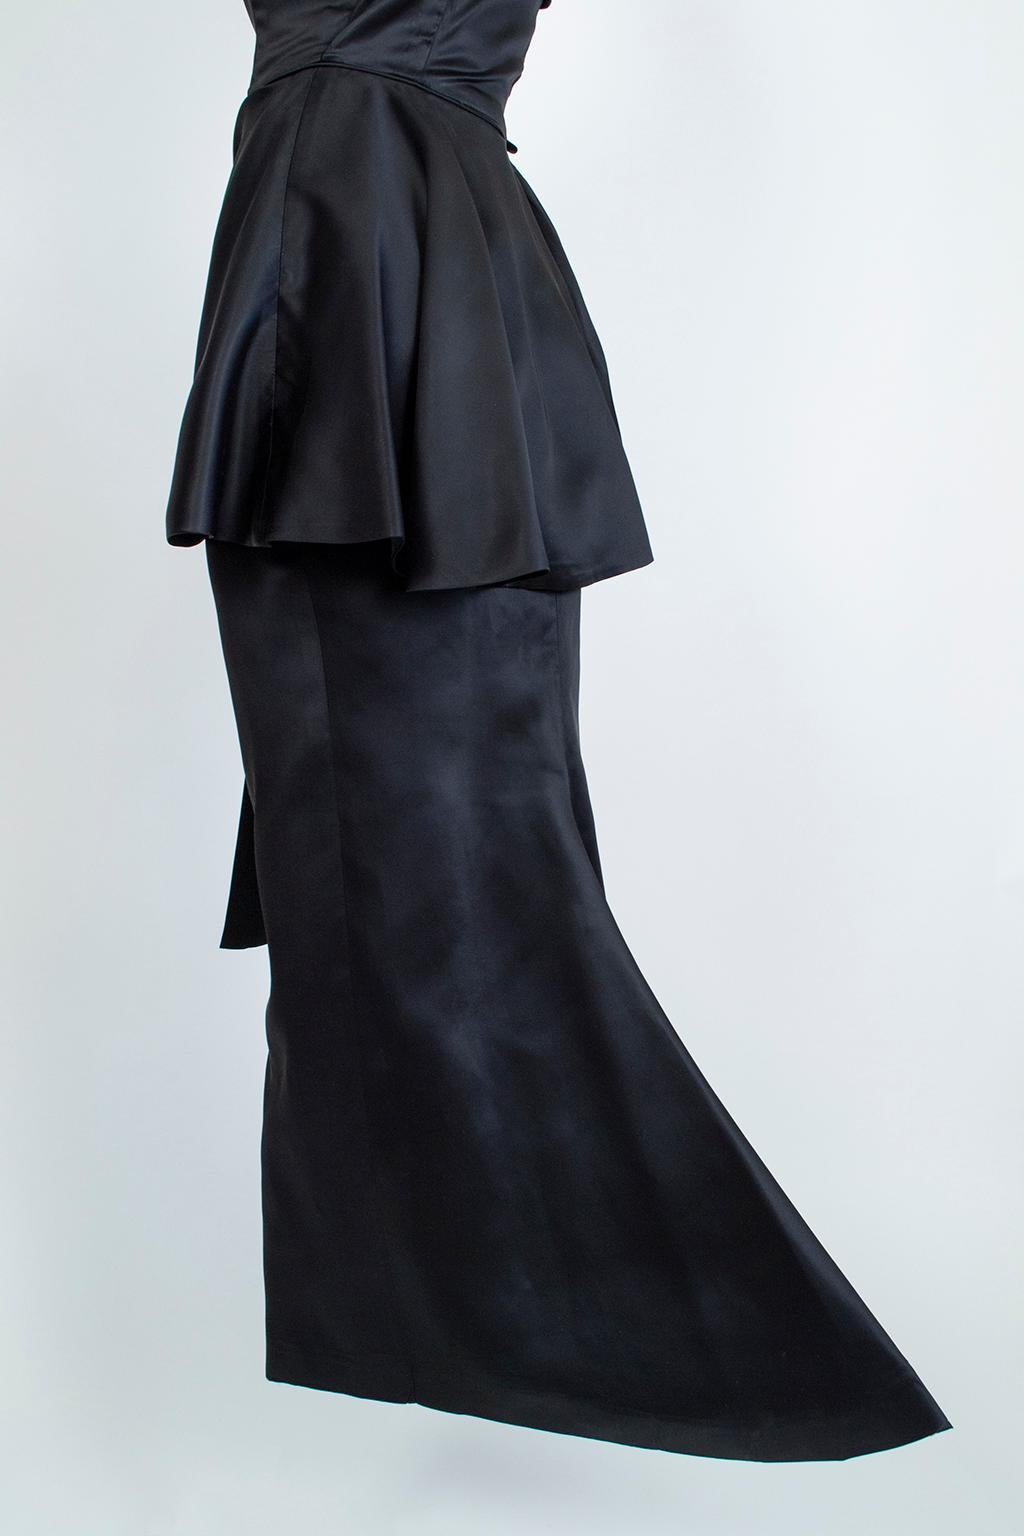 Black Satin Asymmetrical Mermaid Peplum Gown with Detachable Hip Sash- XS, 1950s 6